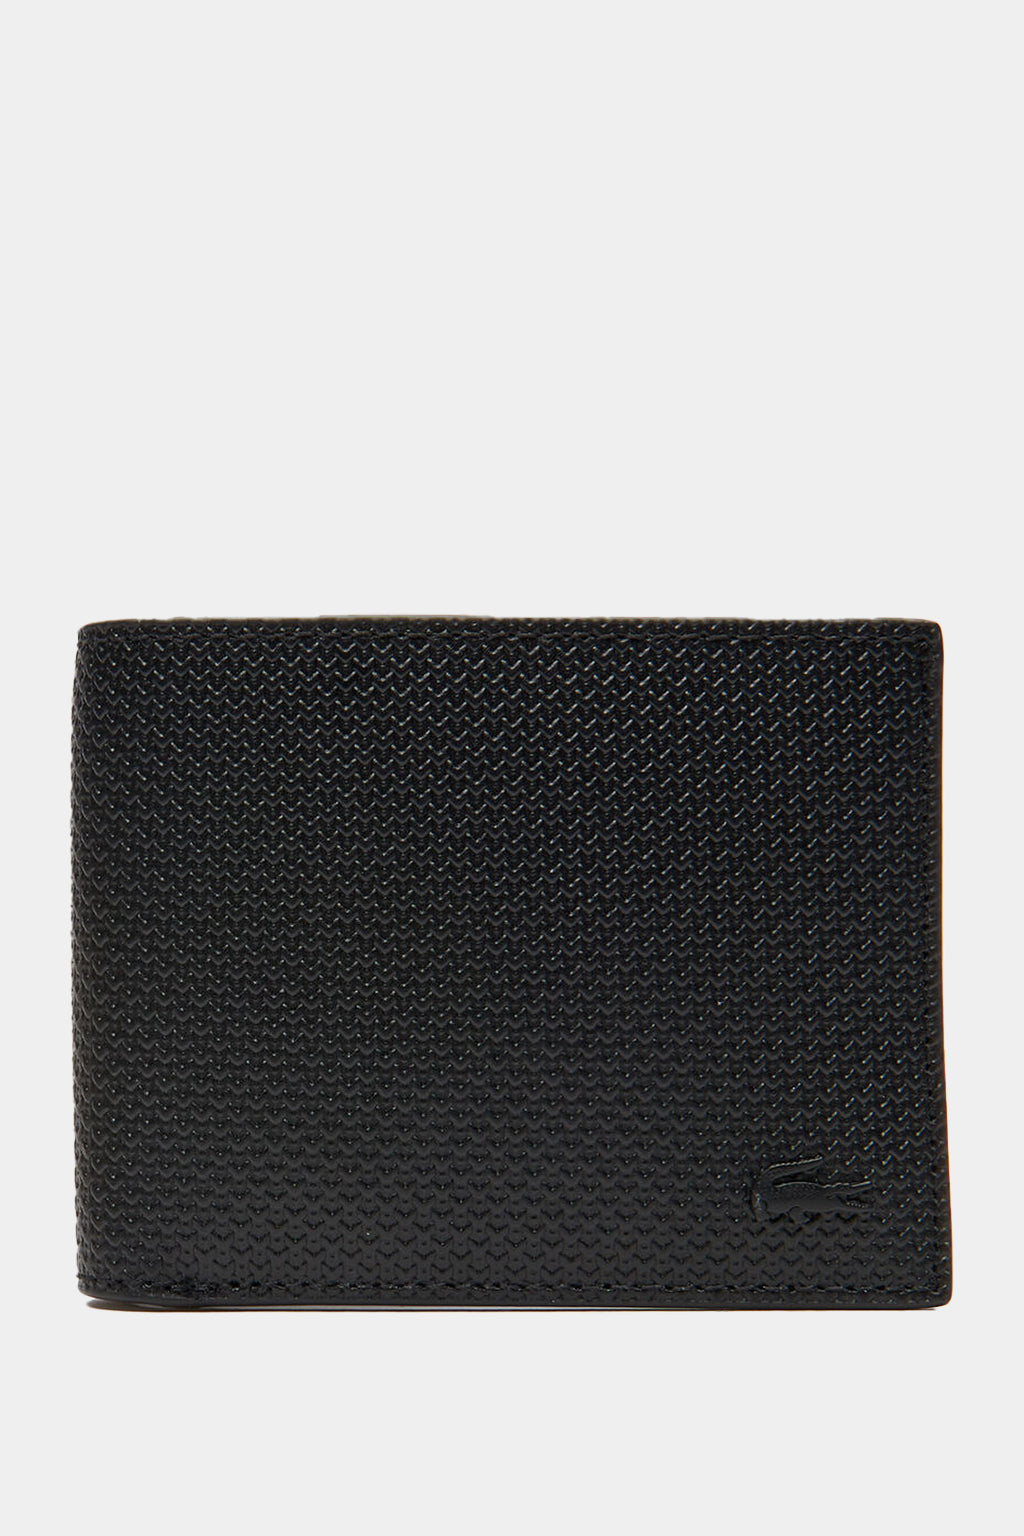 Lacoste - Chantaco Pique Leather 3 Card Wallet